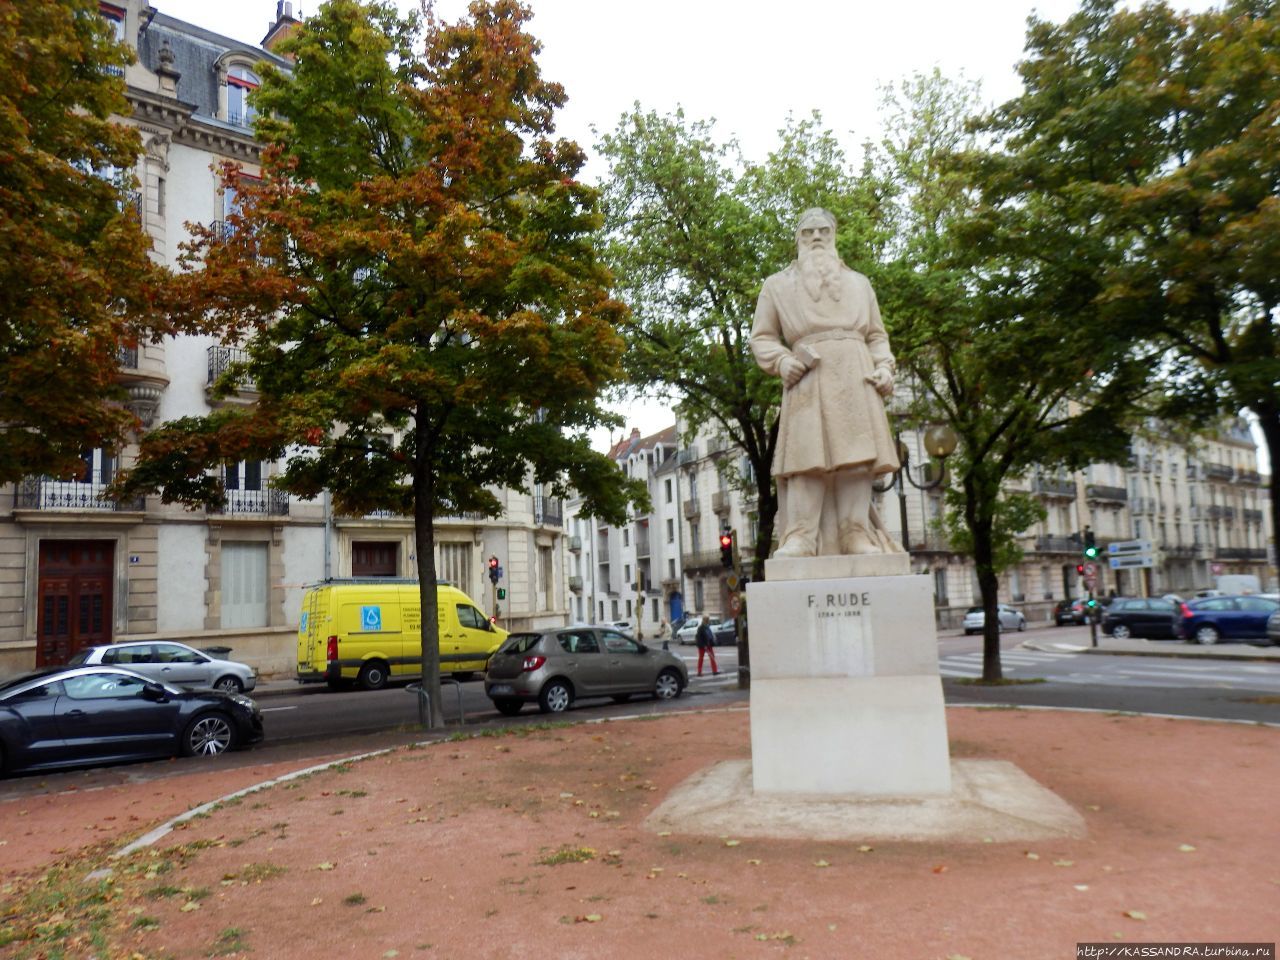 Сентябрь  на площади Франсуа Рюда  в Дижоне Дижон, Франция